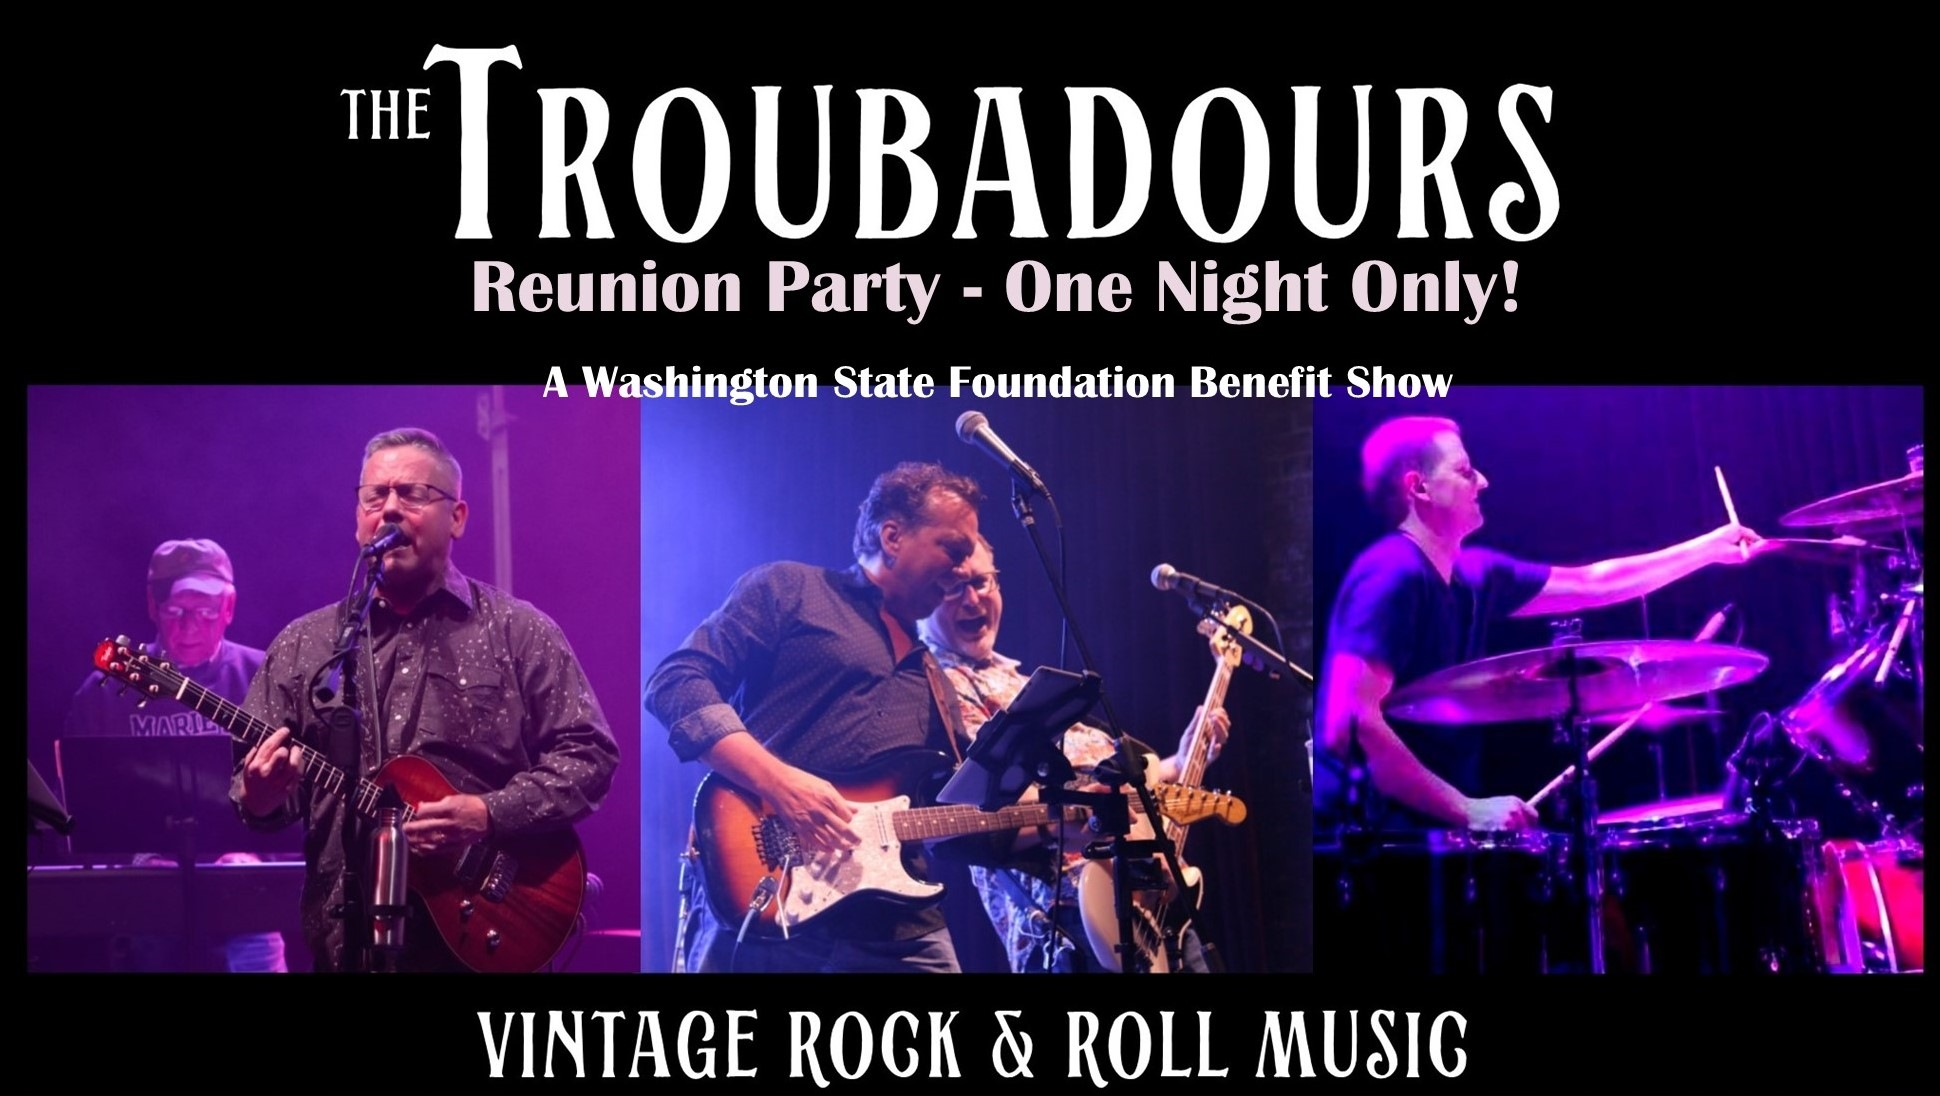 The Troubadours Reunion Party- A Washington State Foundation Benefit Show